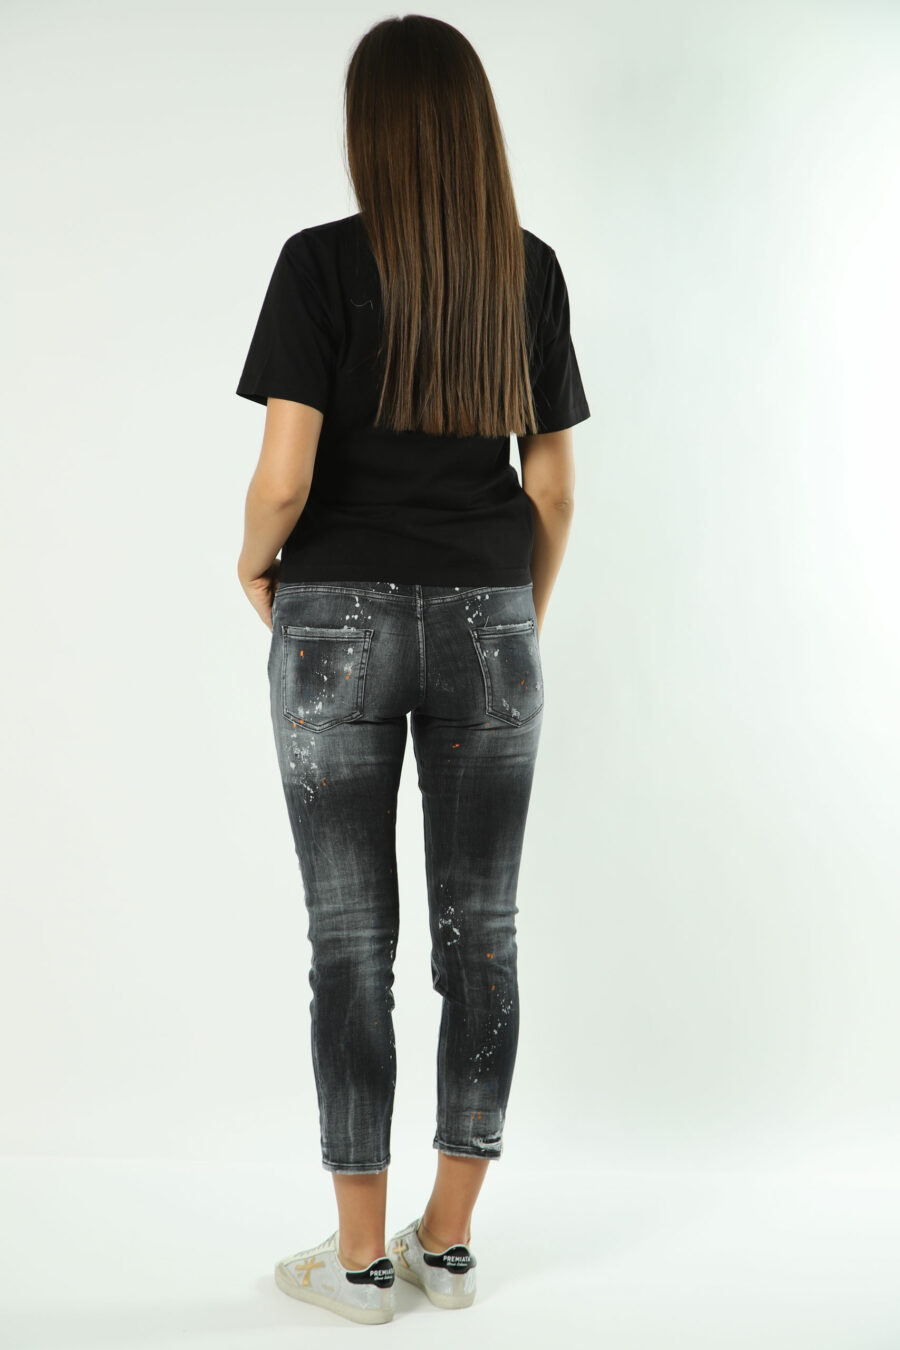 Schwarze "Cool-Girl-Jeans" mit mehrfarbiger Bemalung - Fotos 1541